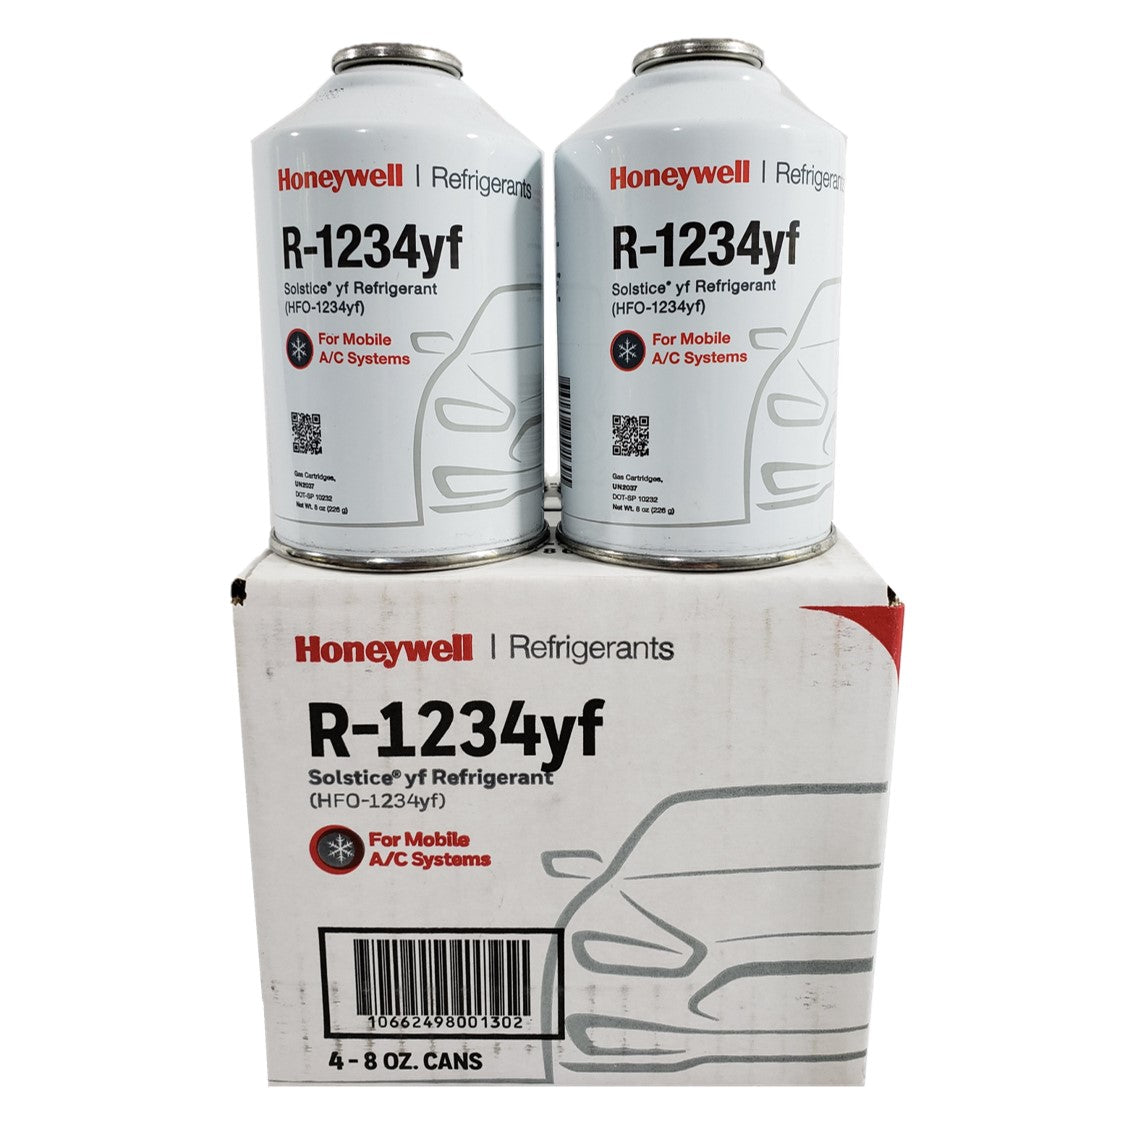 Honeywell R1234yf Auto A/C Air Conditioning Refrigerant Freon Gas 8oz | 04 Cans